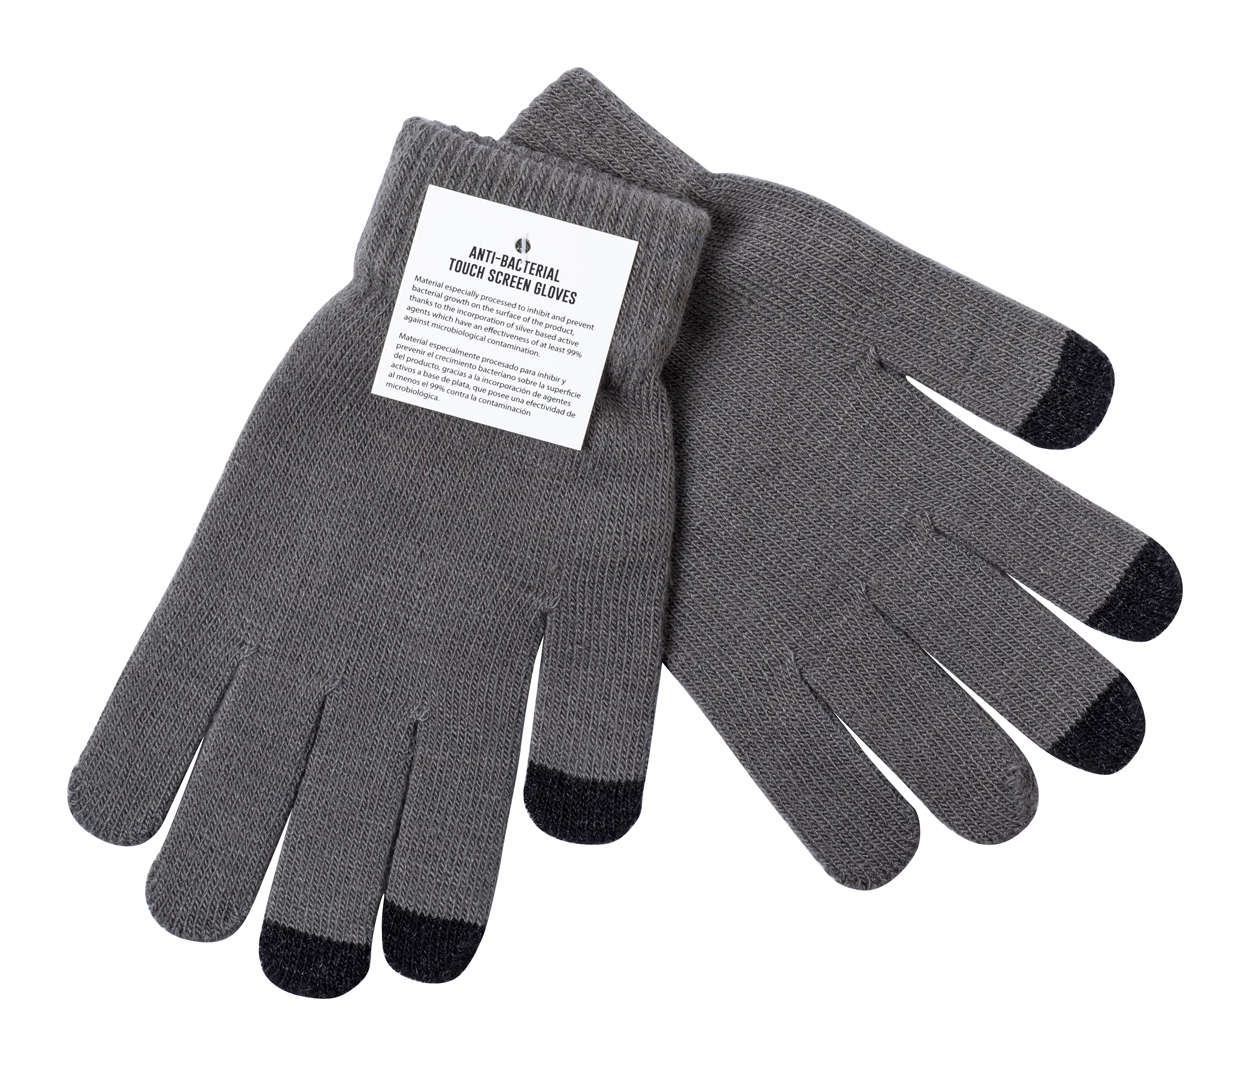 Tenex antibacterial touch gloves - grey